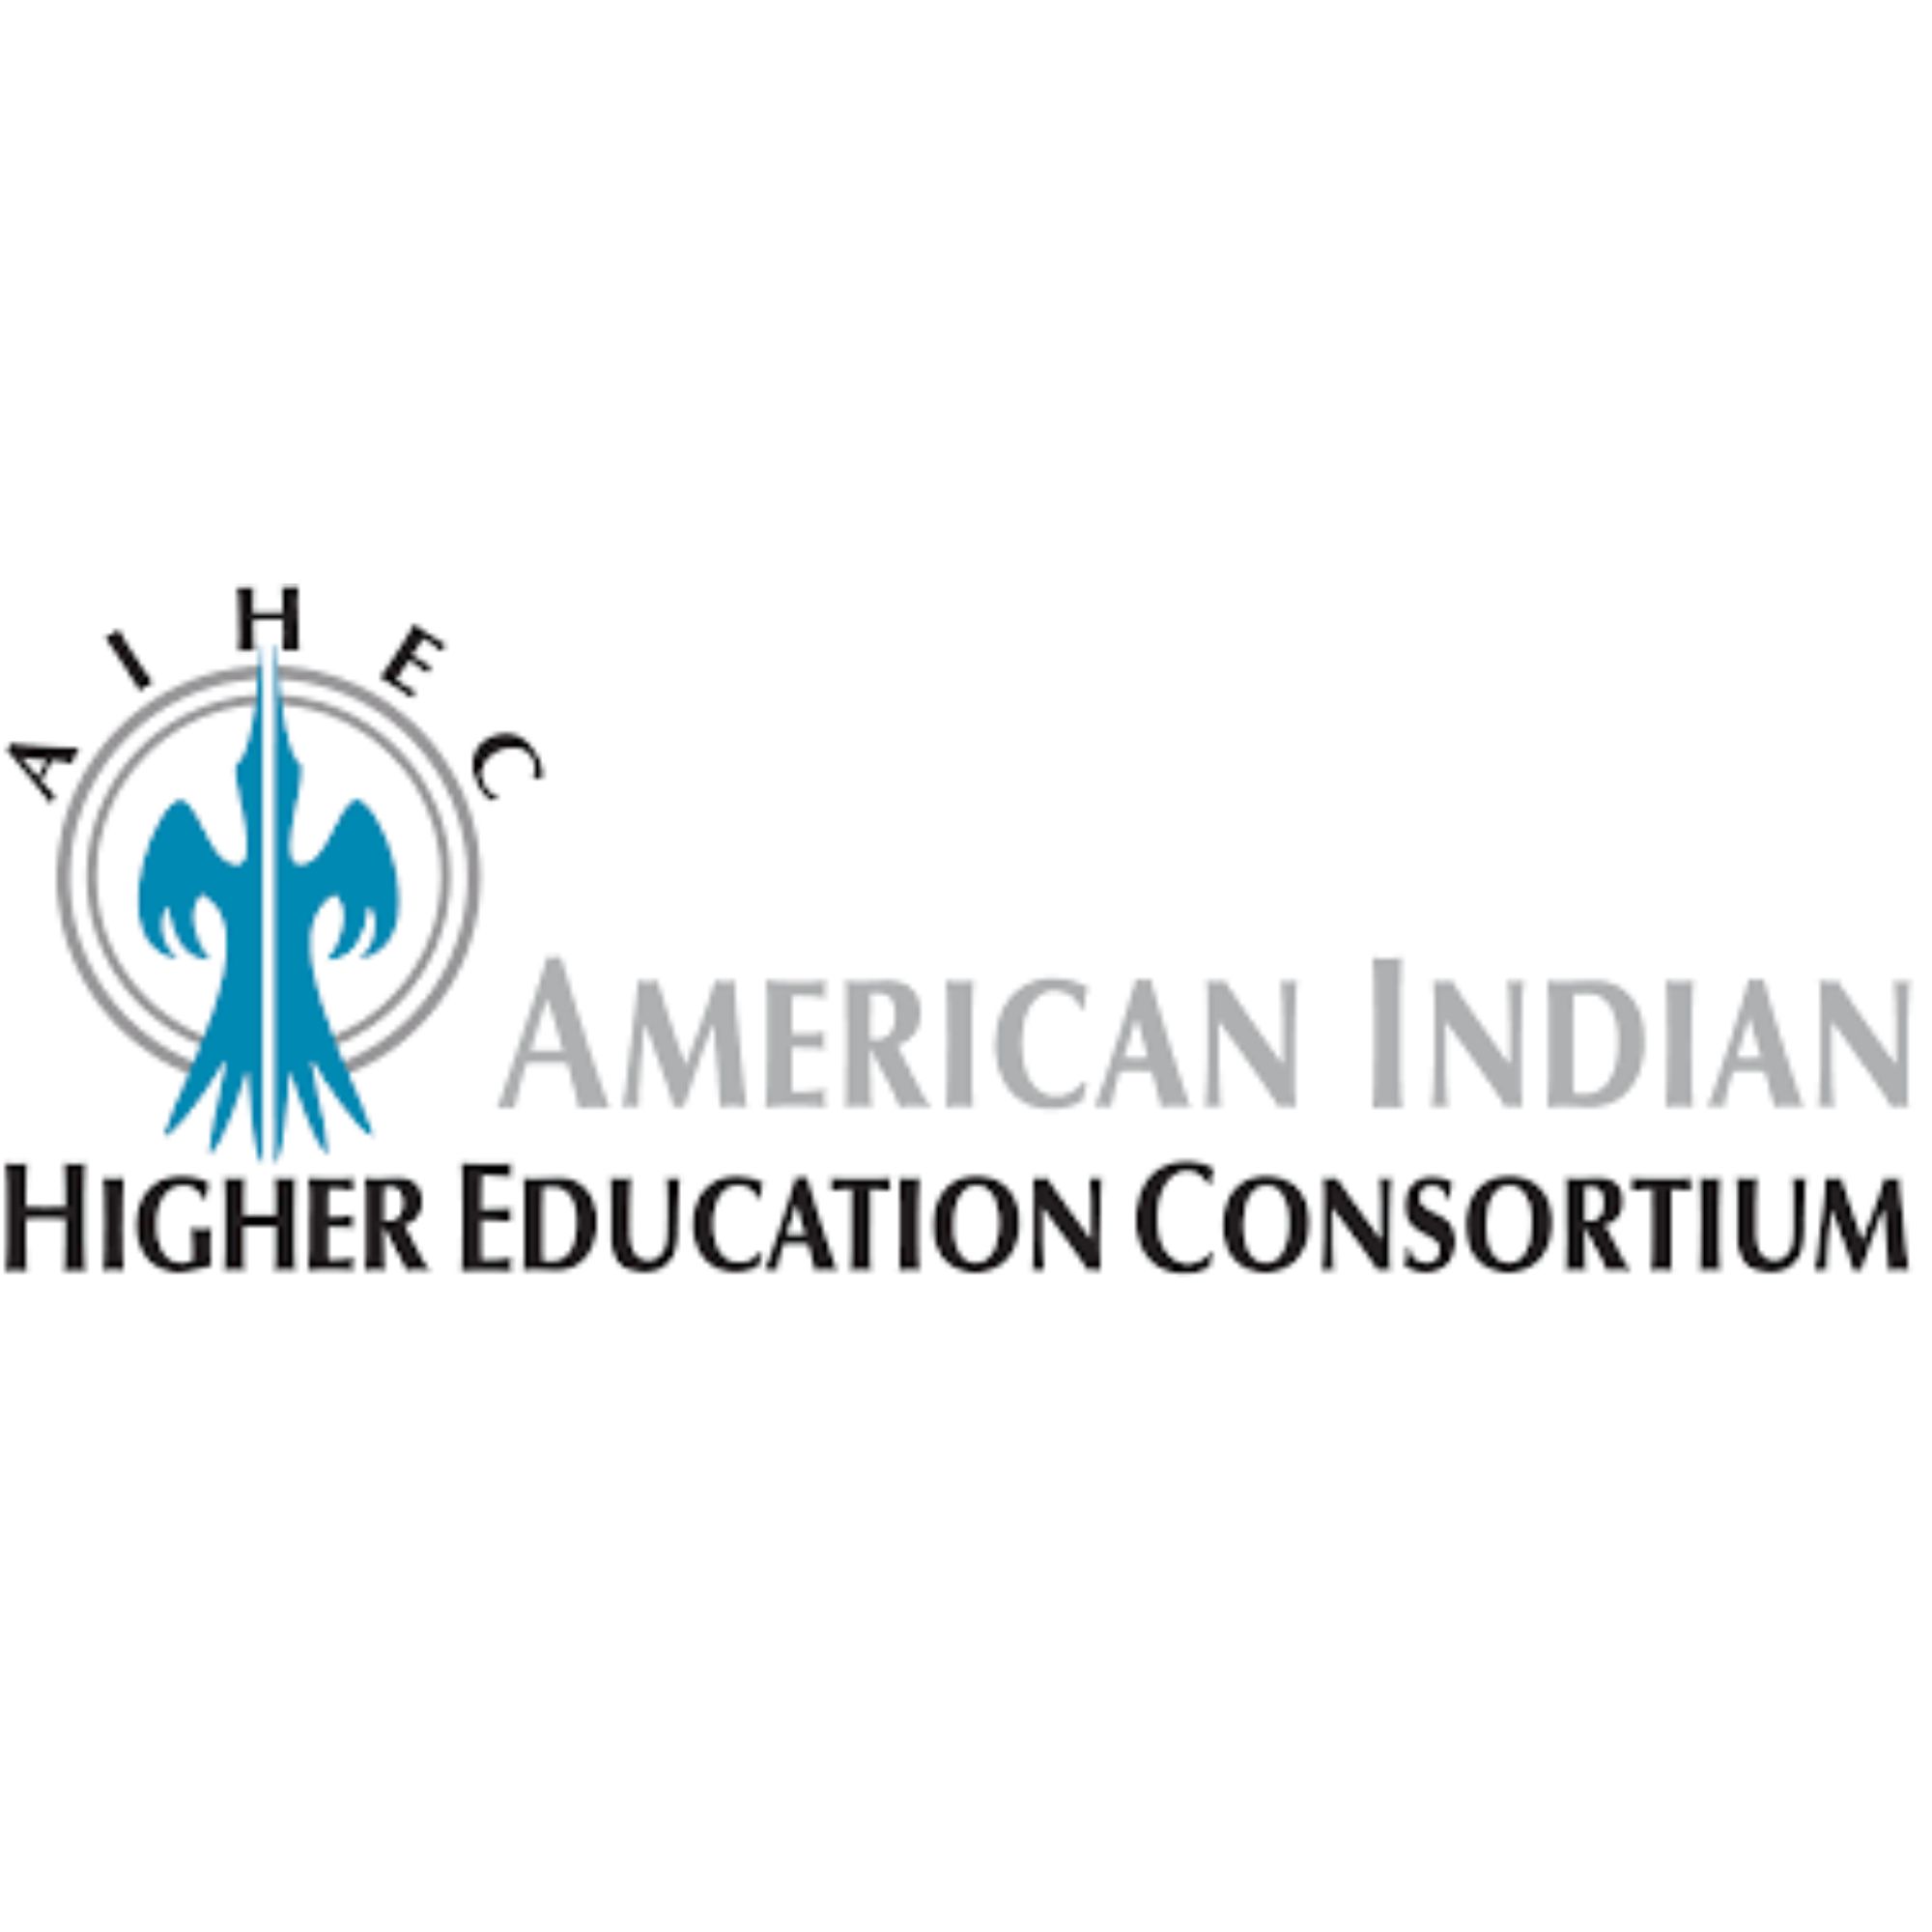 AMERICAN INDIAN HIGHER EDUCATION CONSORTIUM